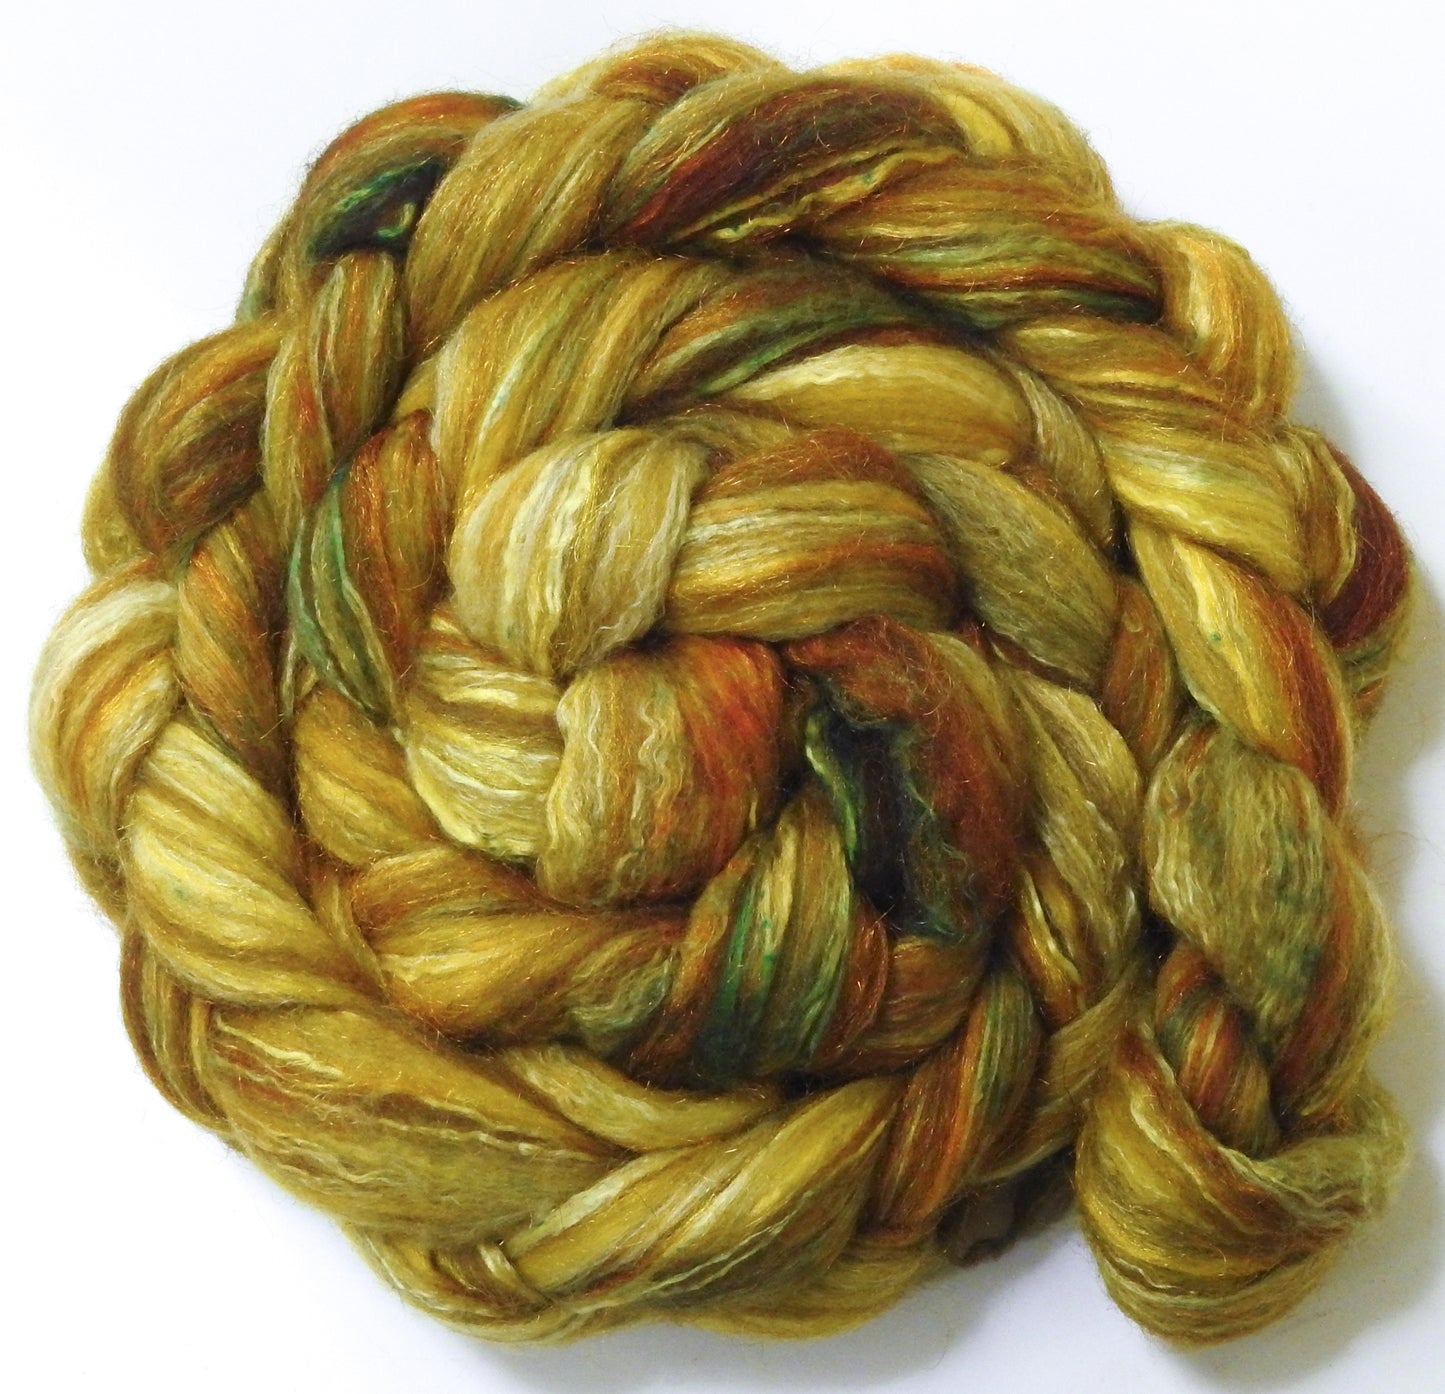 Sunflower-Batt in a Braid #7 - (6 oz.) Polwarth/ Manx / Mulberry silk/ Firestar (30/30/30/10)